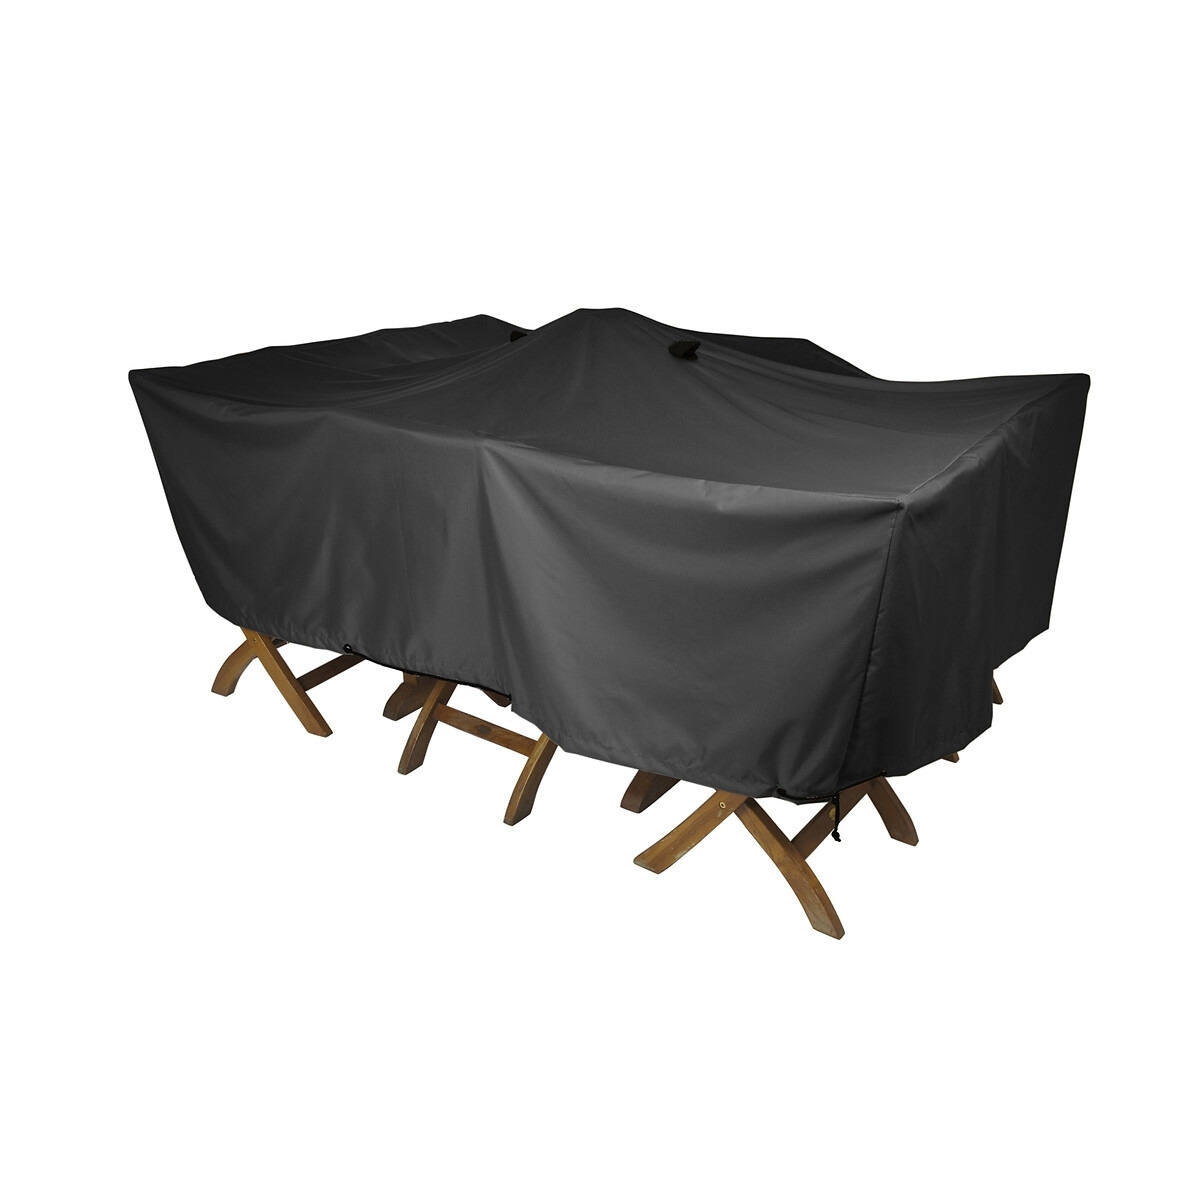 Pext L310cm Garden Table Protective Cover - image 1